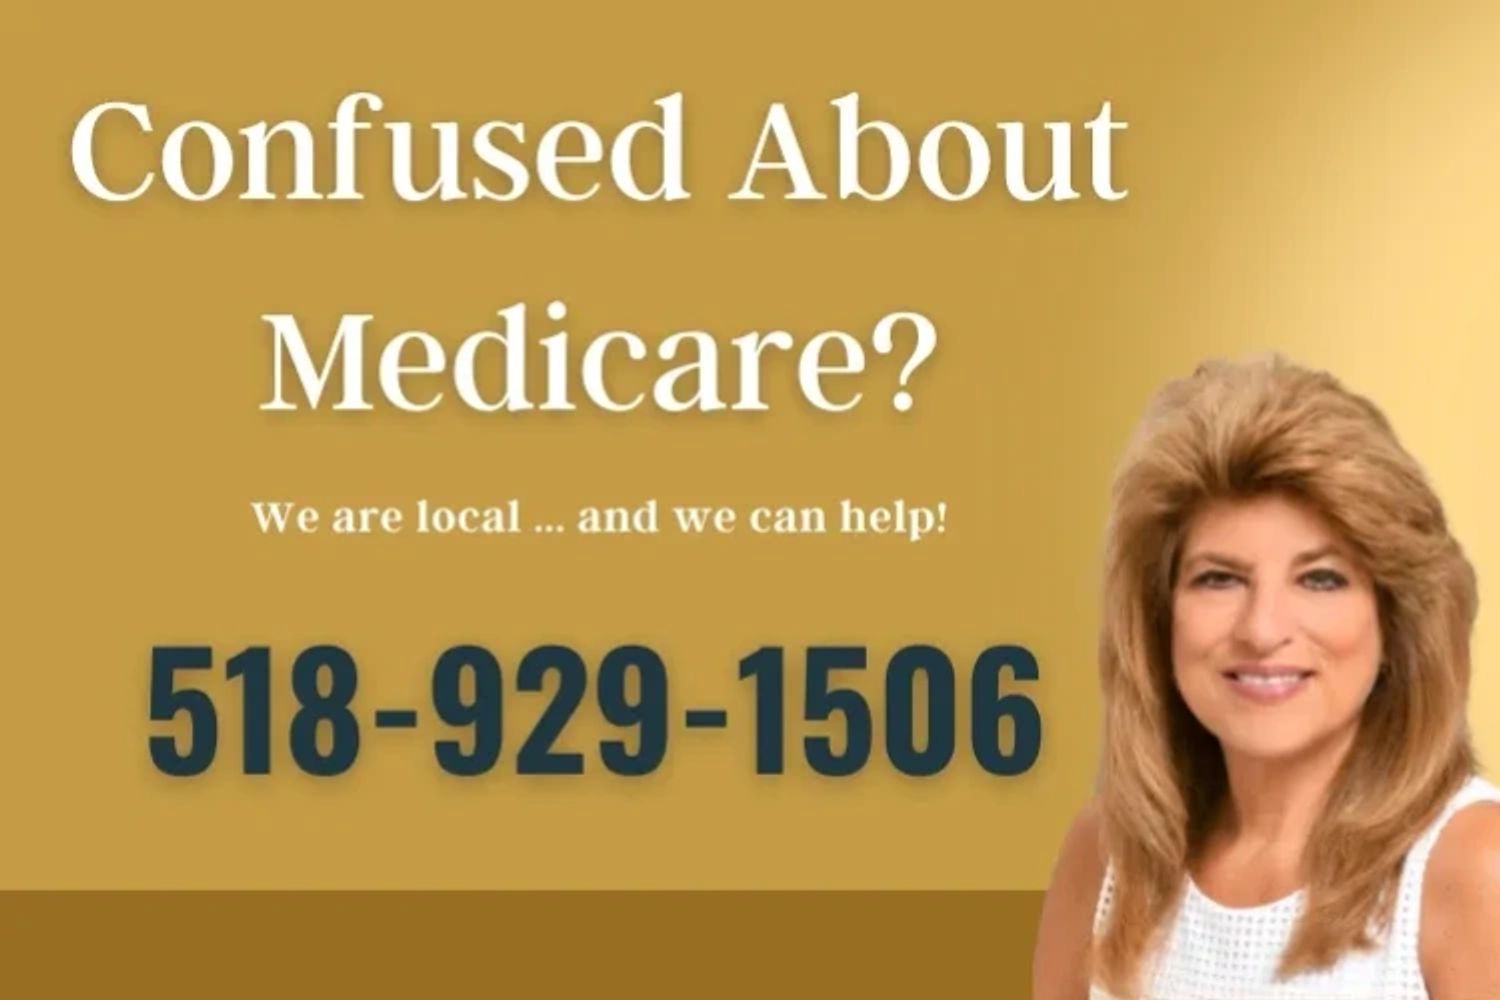 Medicare
Medicare Assistance
Help with Medicare